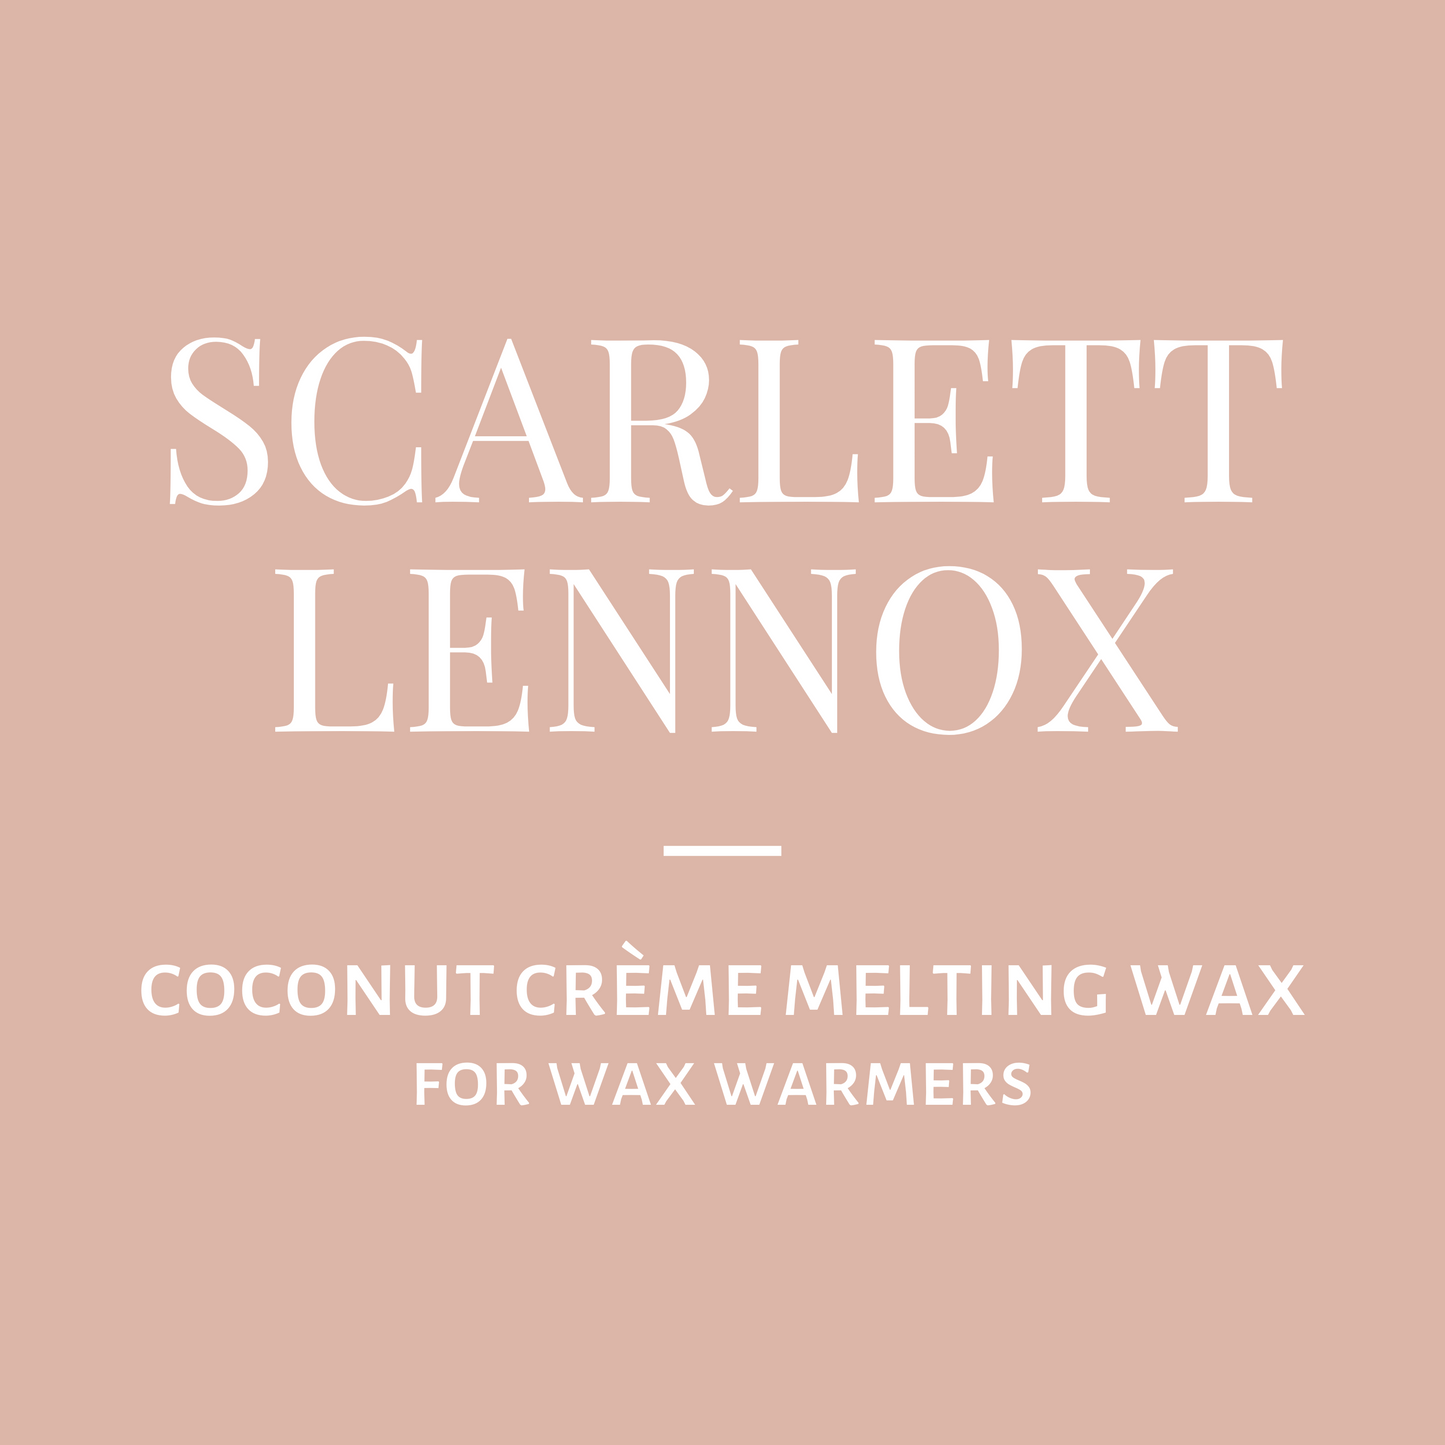 Melting Wax-Scarlett Lennox